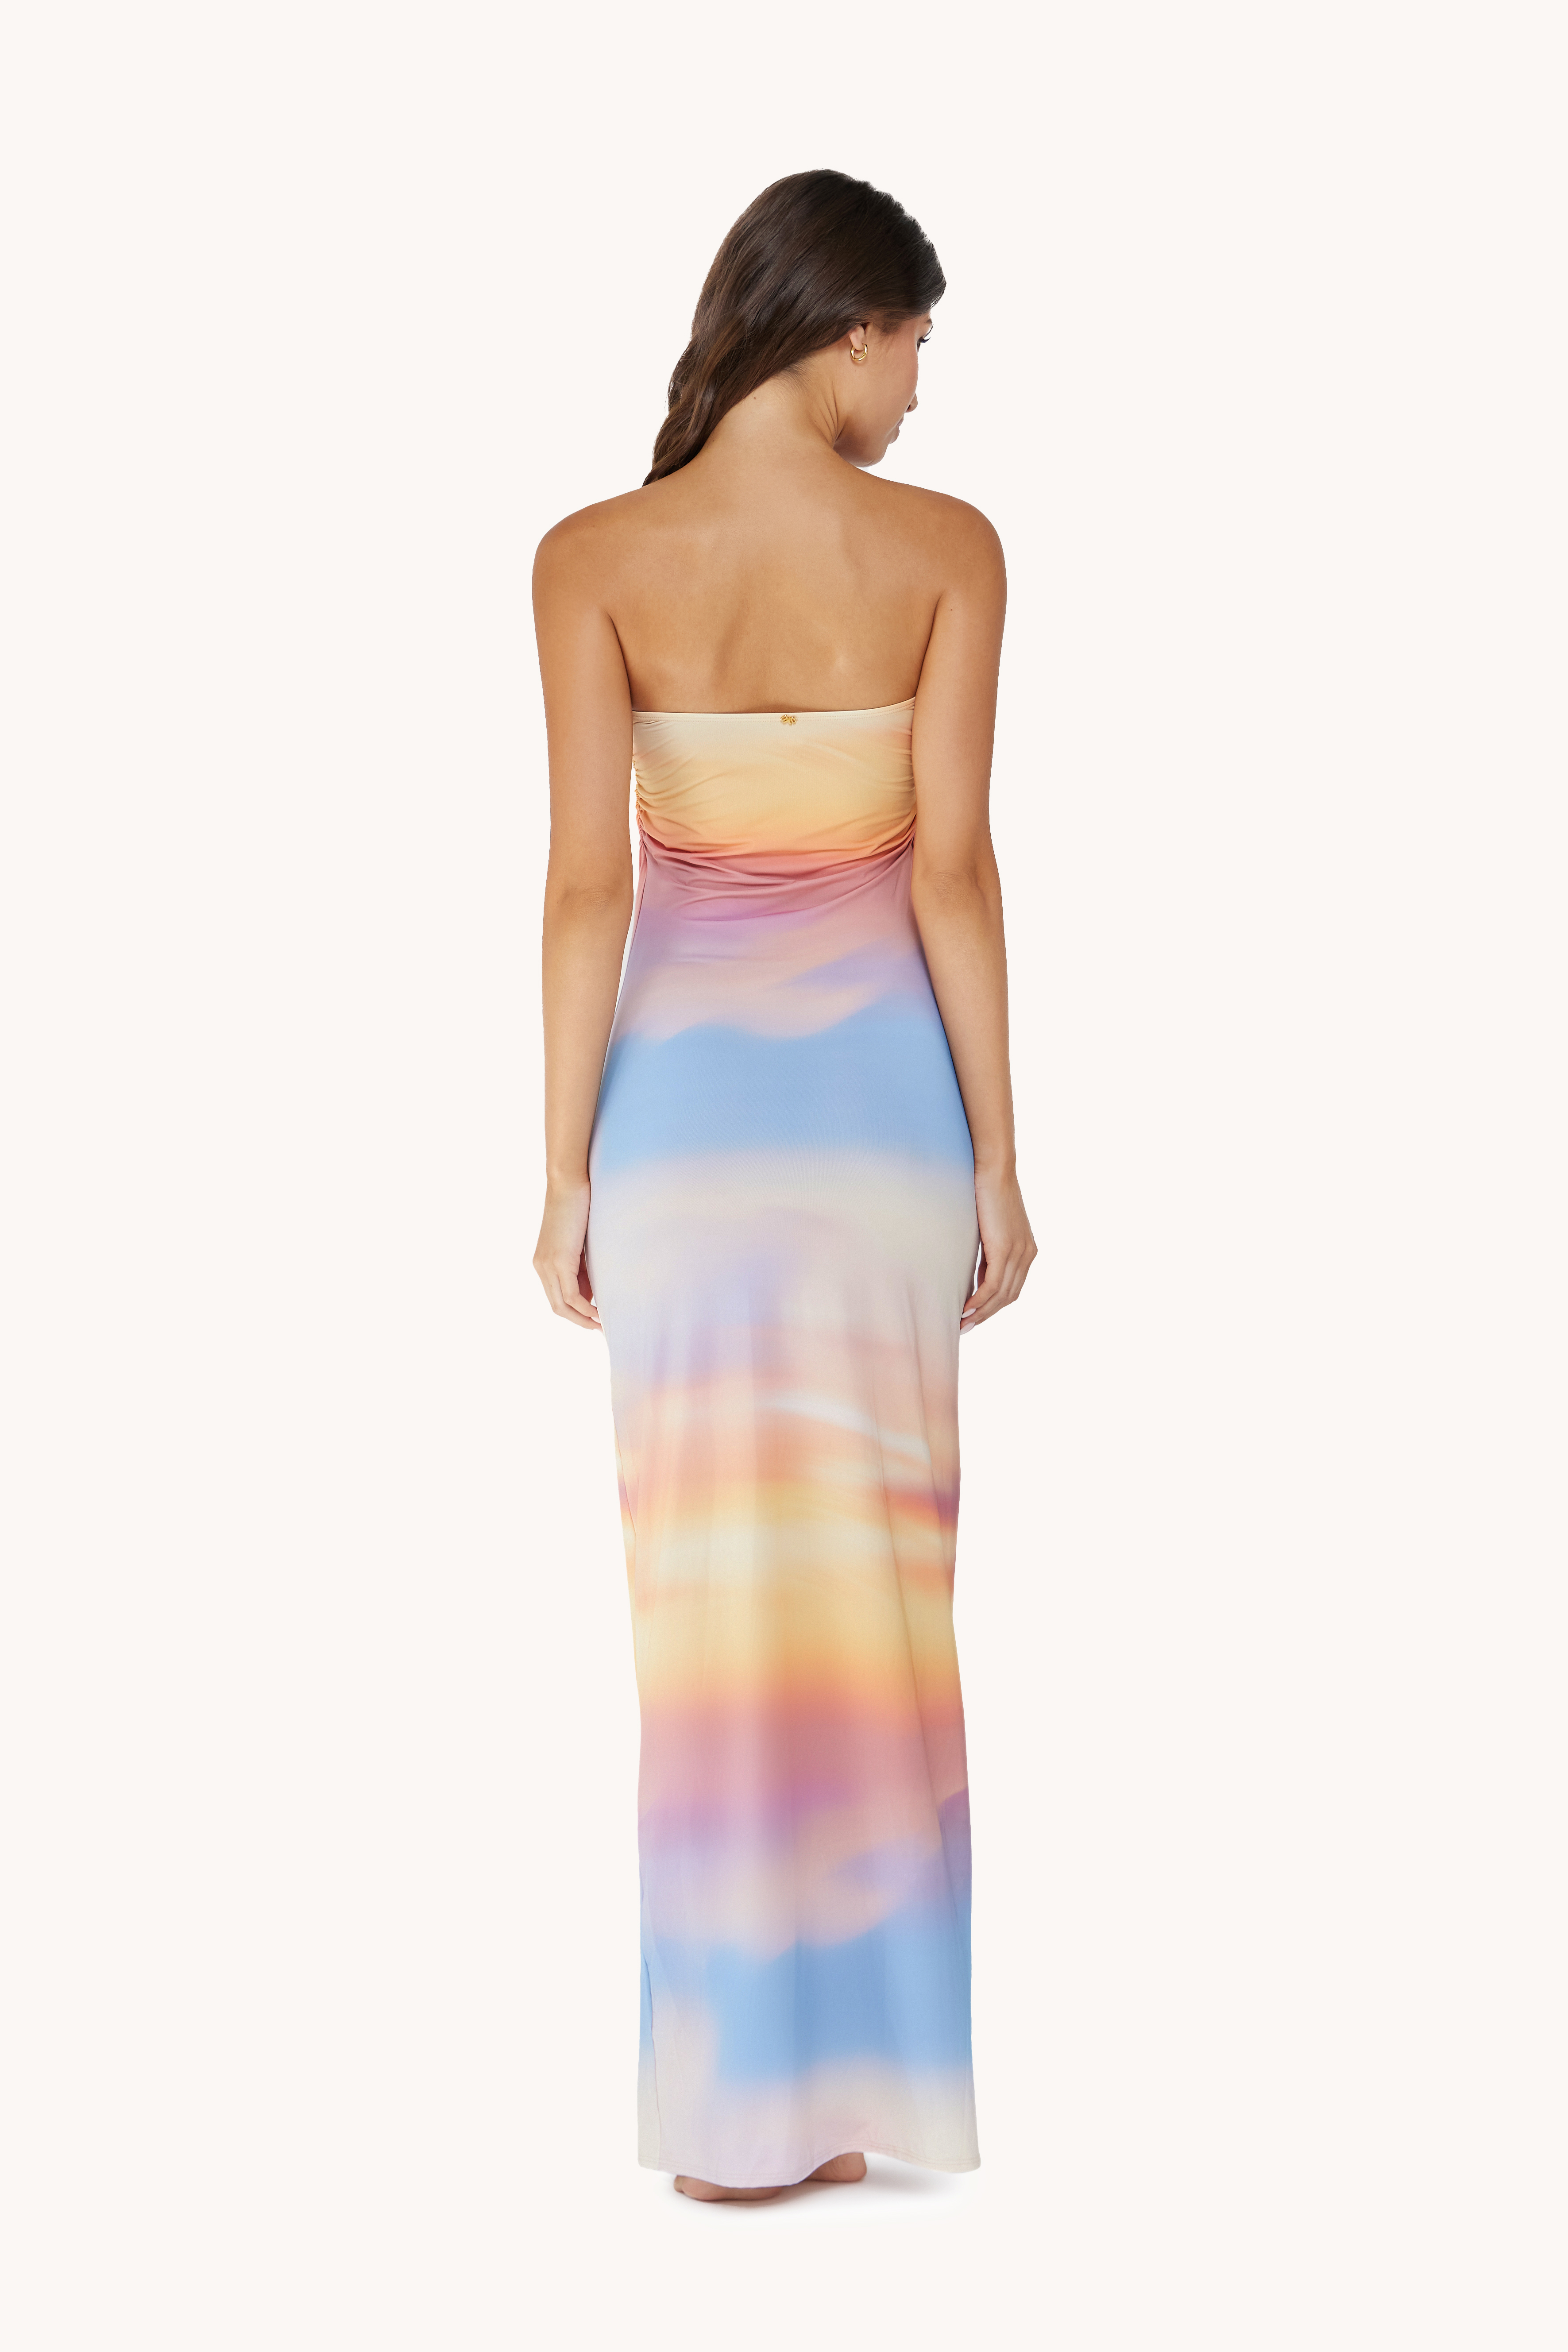 Shop The Look: Sunset Skies Mila Triangle Bikini + Strapless Dress